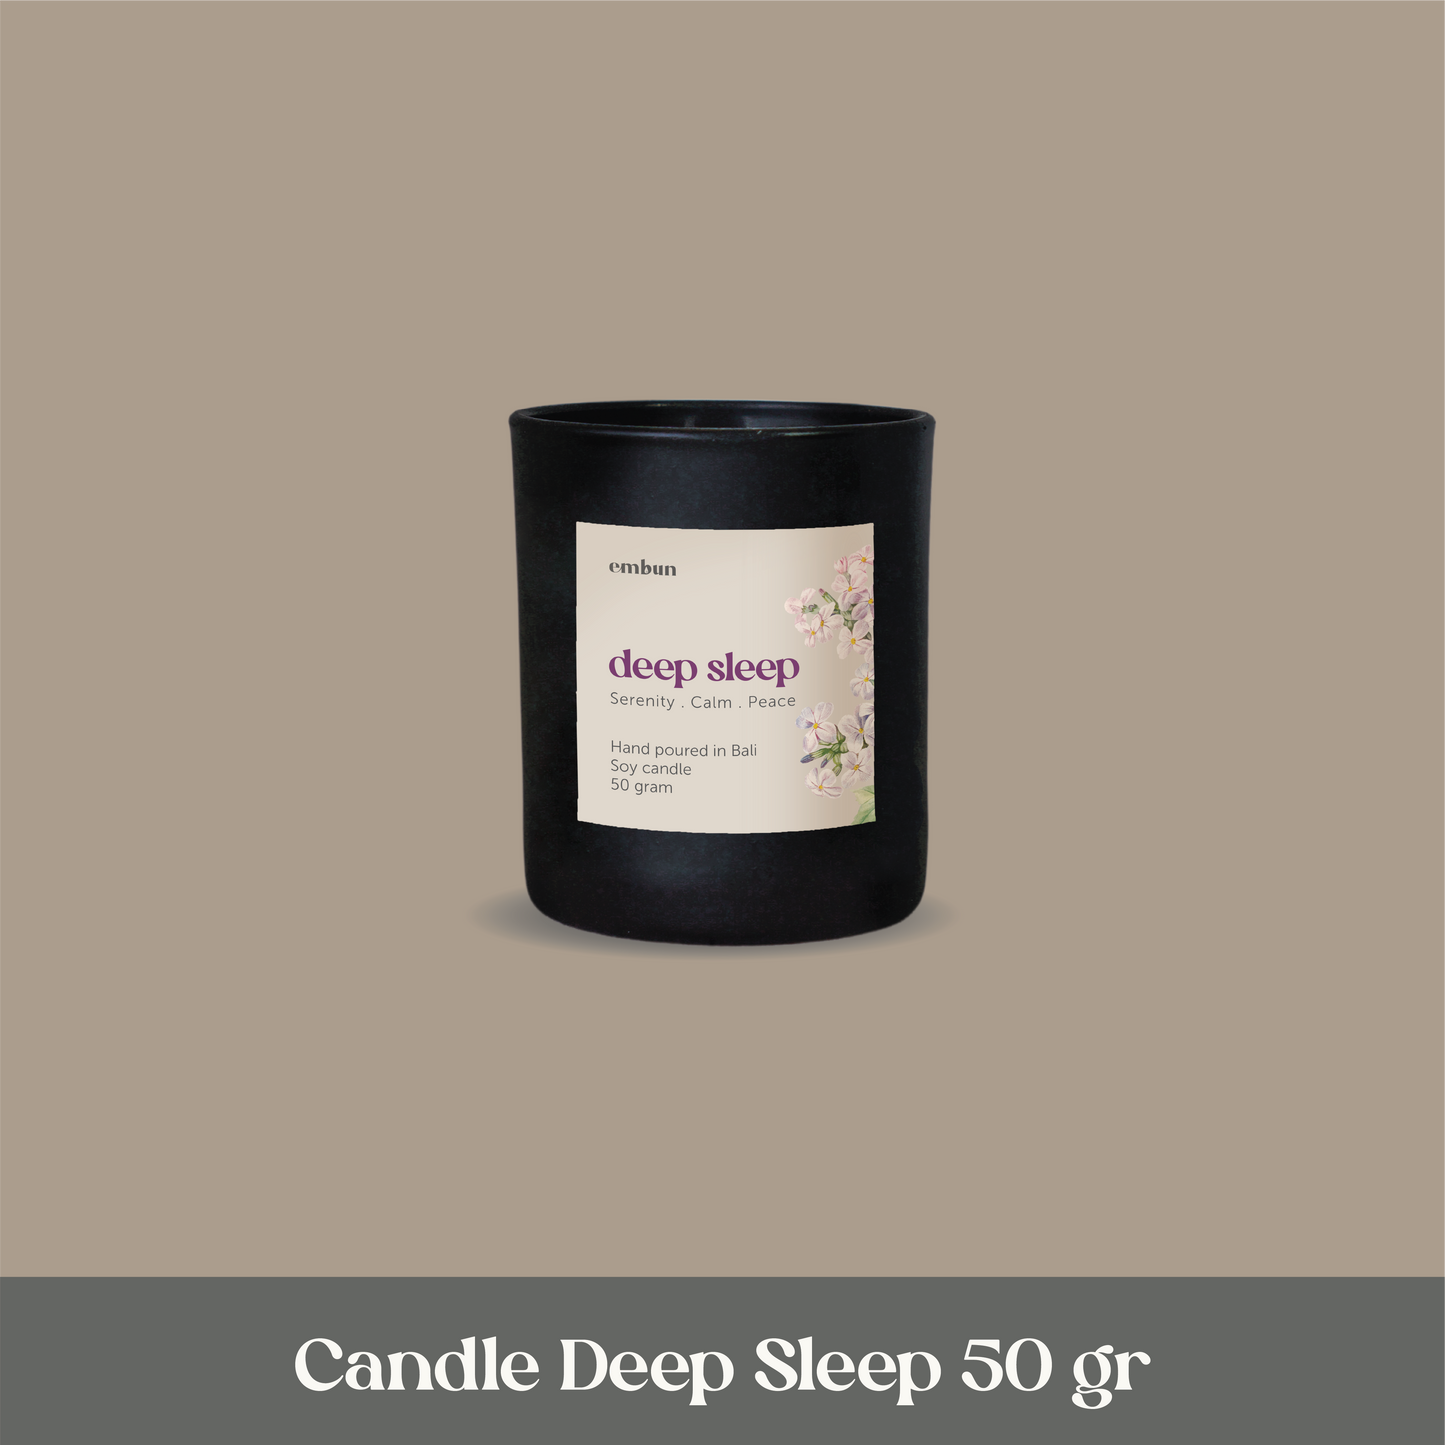 Candle Deep Sleep 50 gr